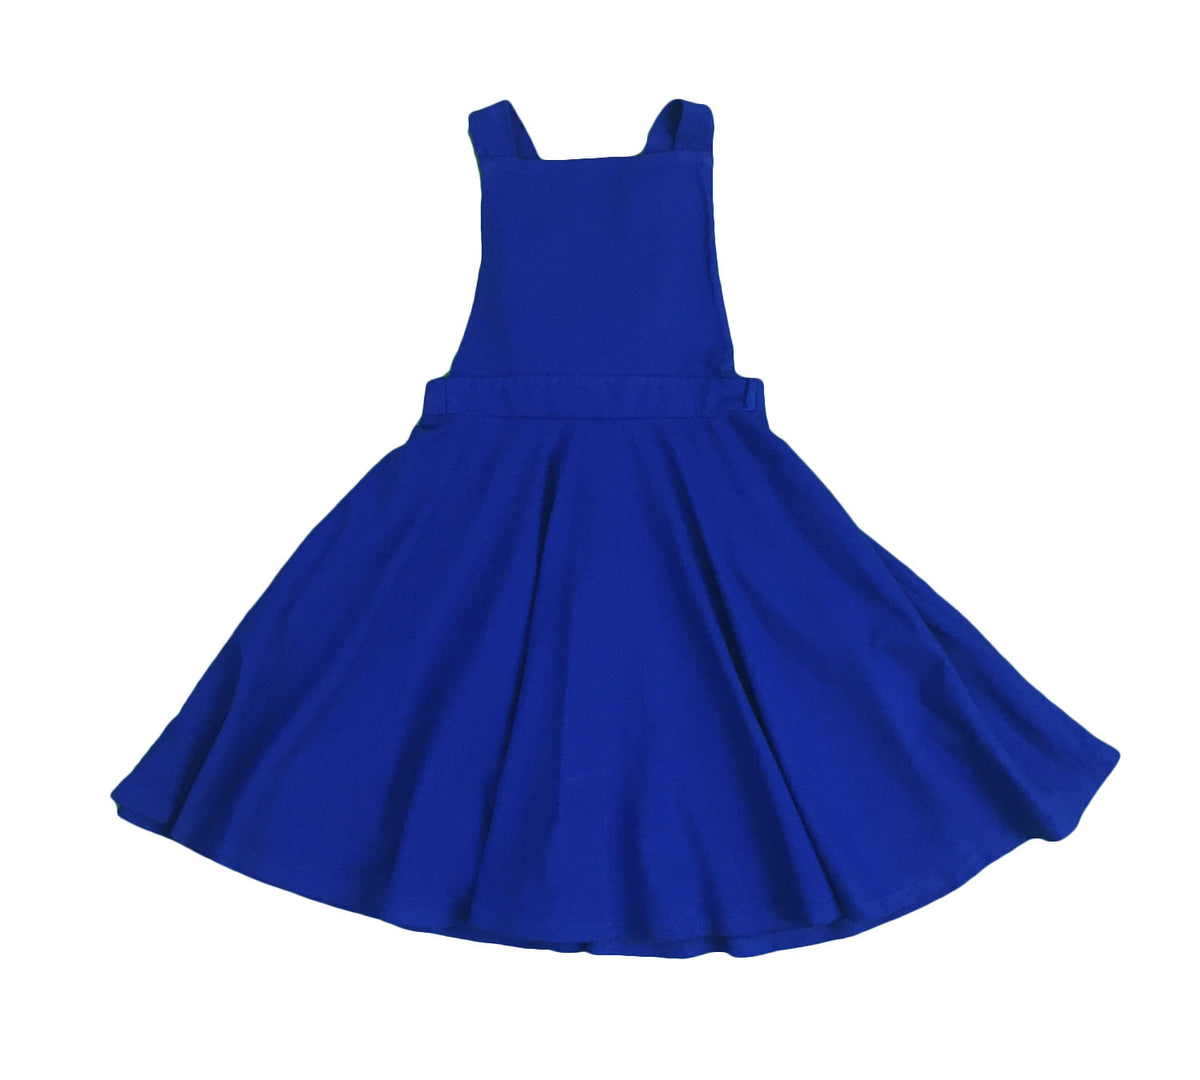 blue overall dress